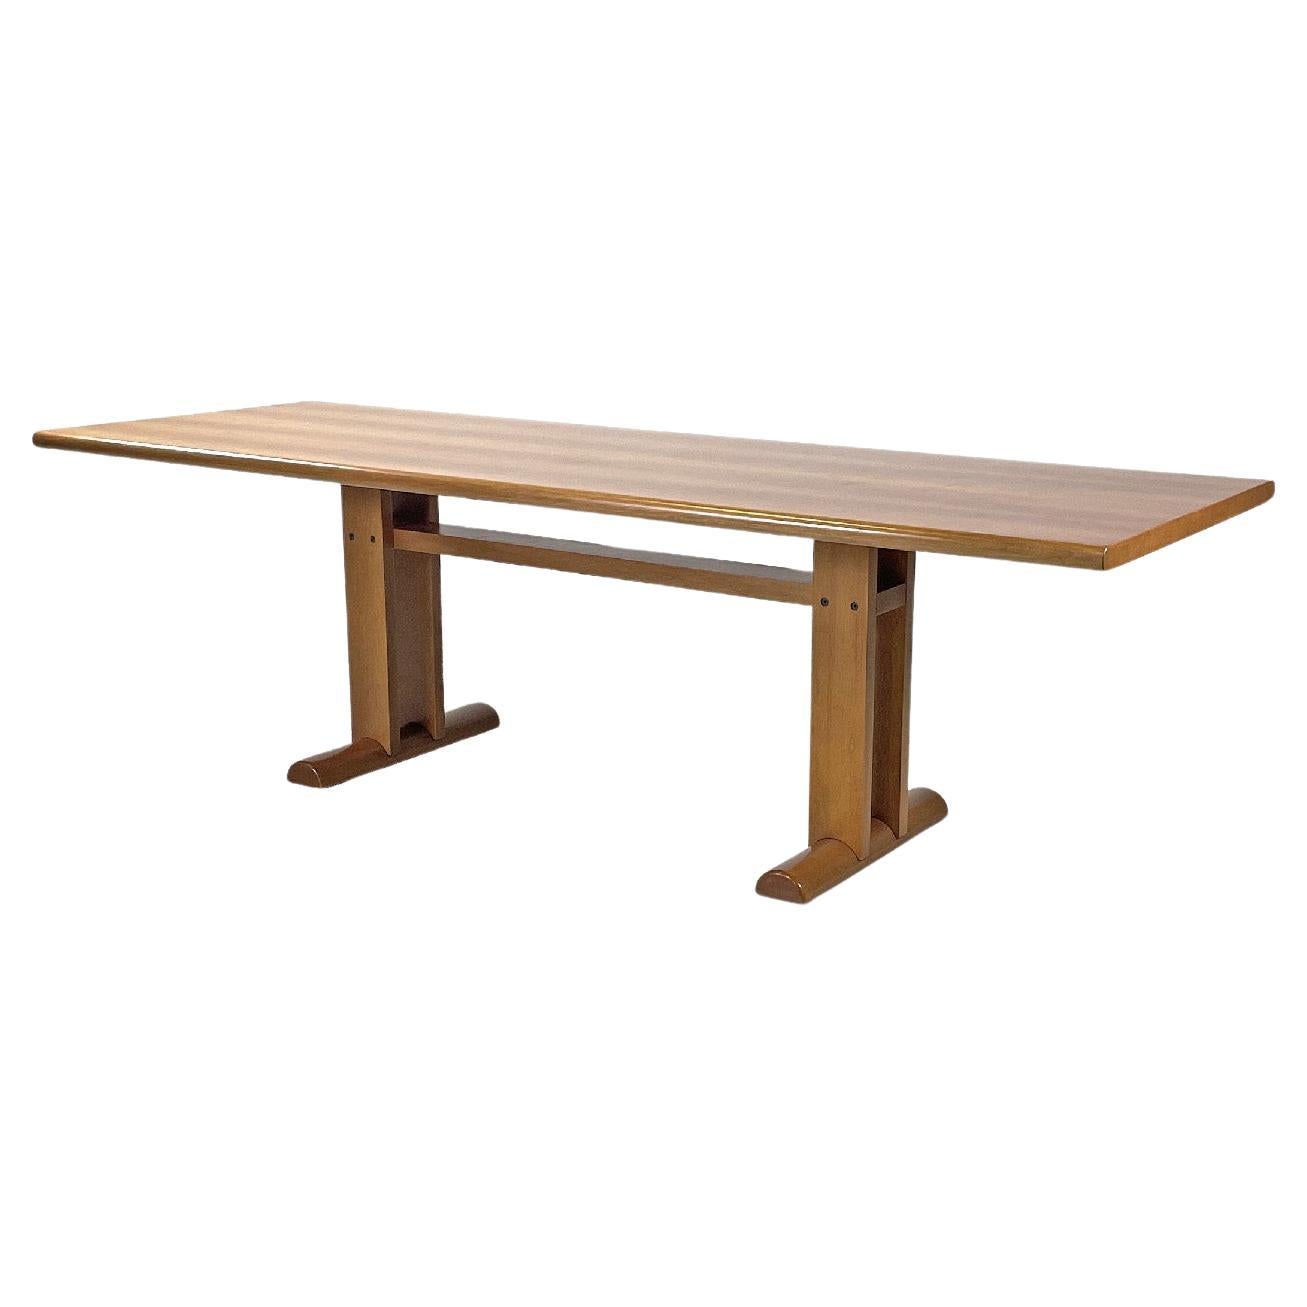 Italian modern rectangular wooden dining table, 1980s